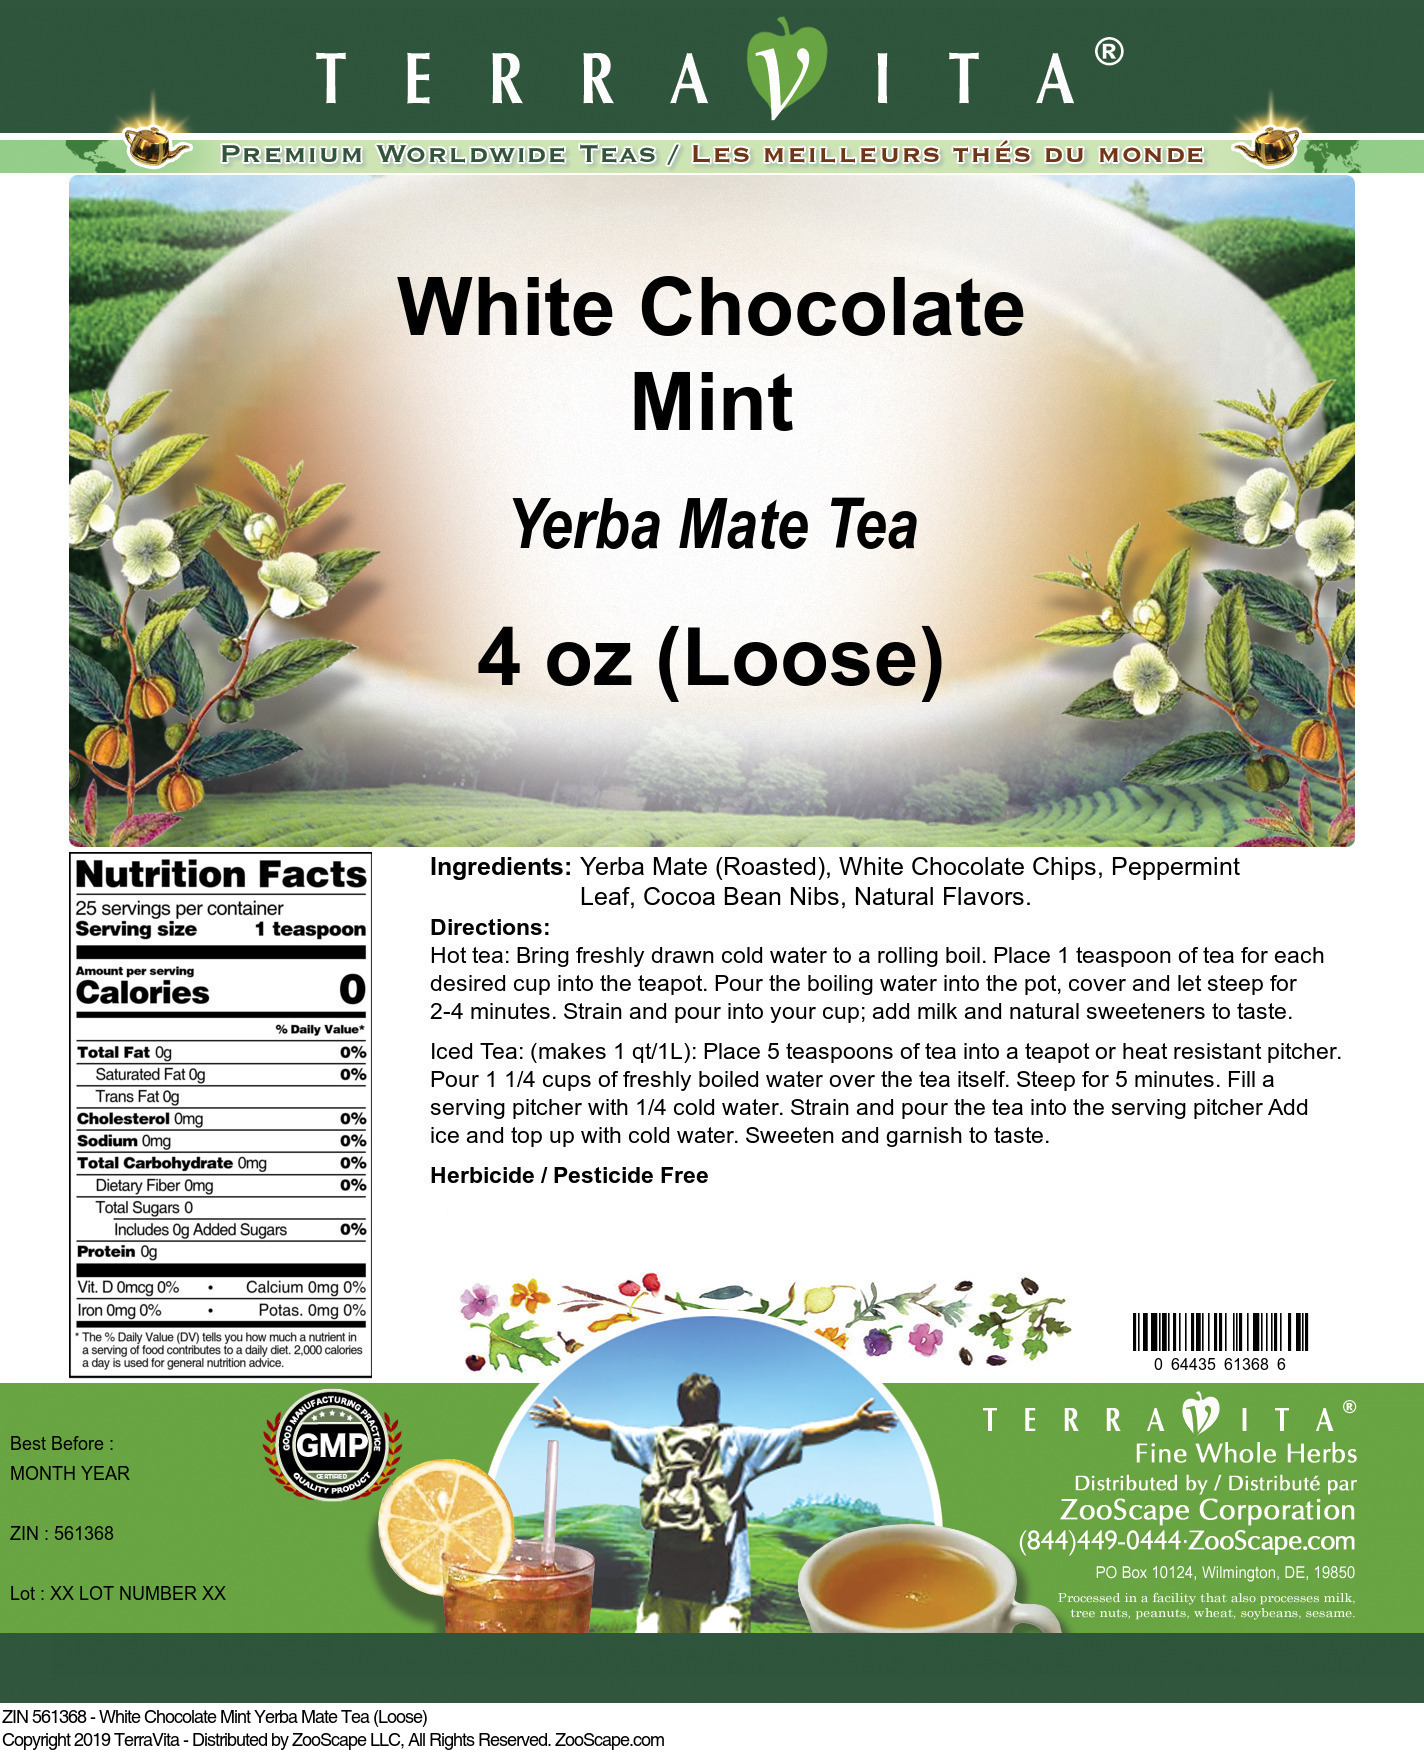 White Chocolate Mint Yerba Mate Tea (Loose) - Label